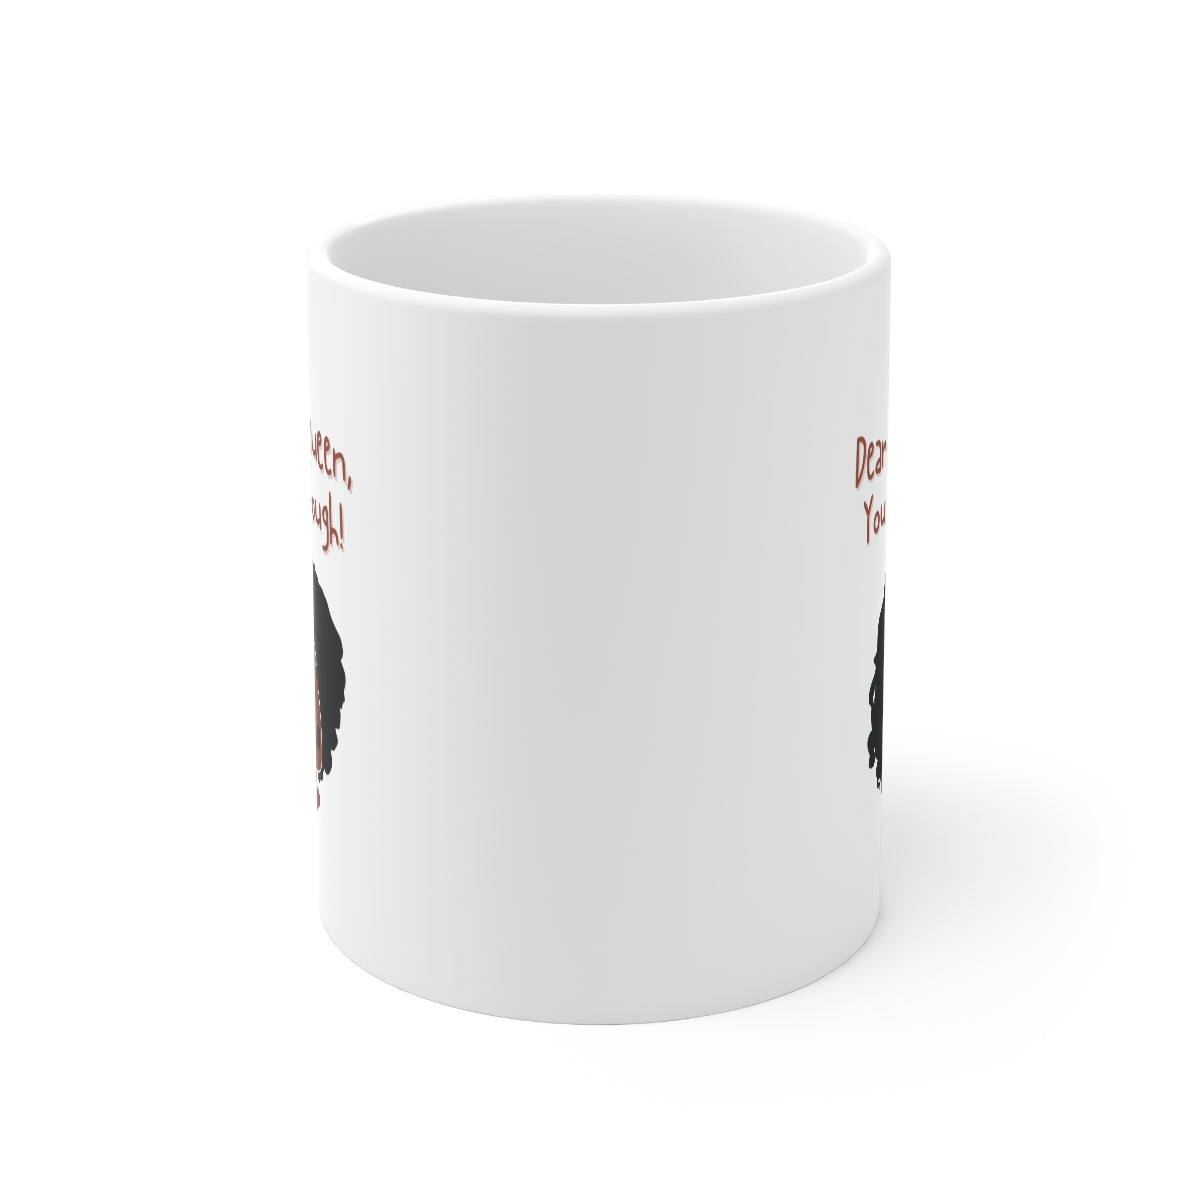 Dear Black Queen Mug Double Sided White Ceramic Coffee Tea Mug- Inspirational Birthday Gift, Motivational Mug, Daily Affirmation Mug, Self Care Gift